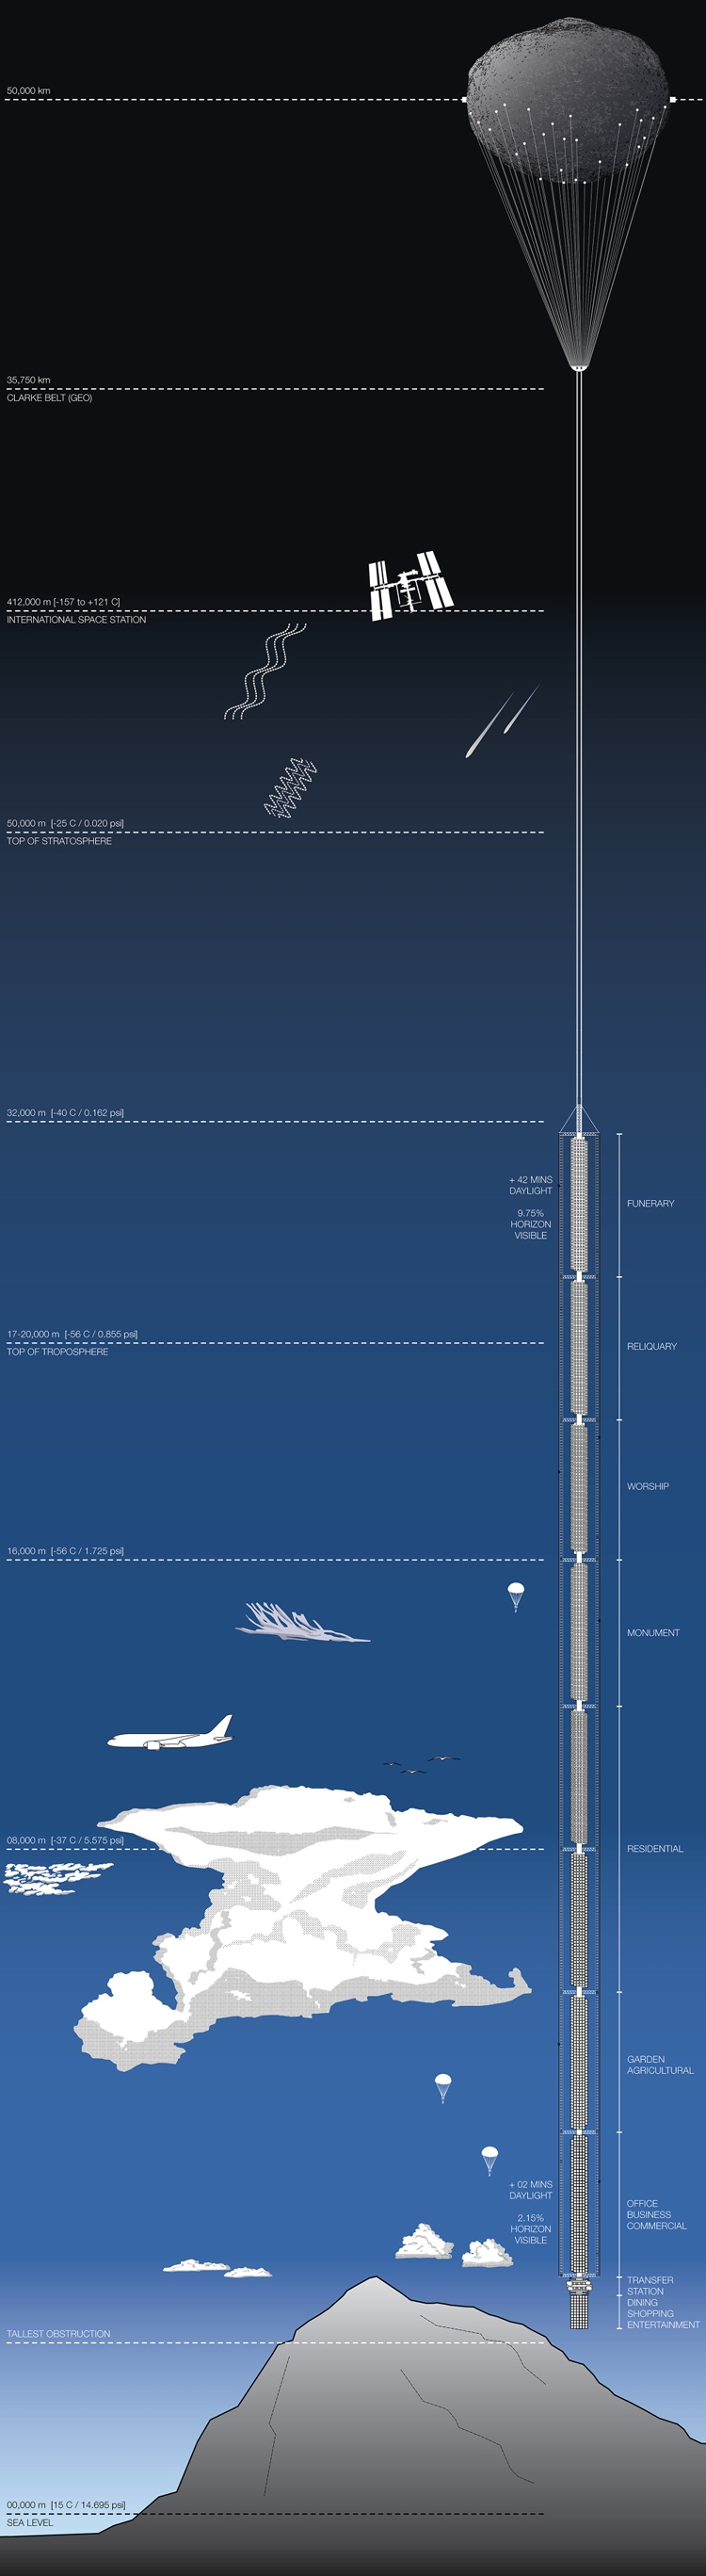 Tower analemma World’s tallest